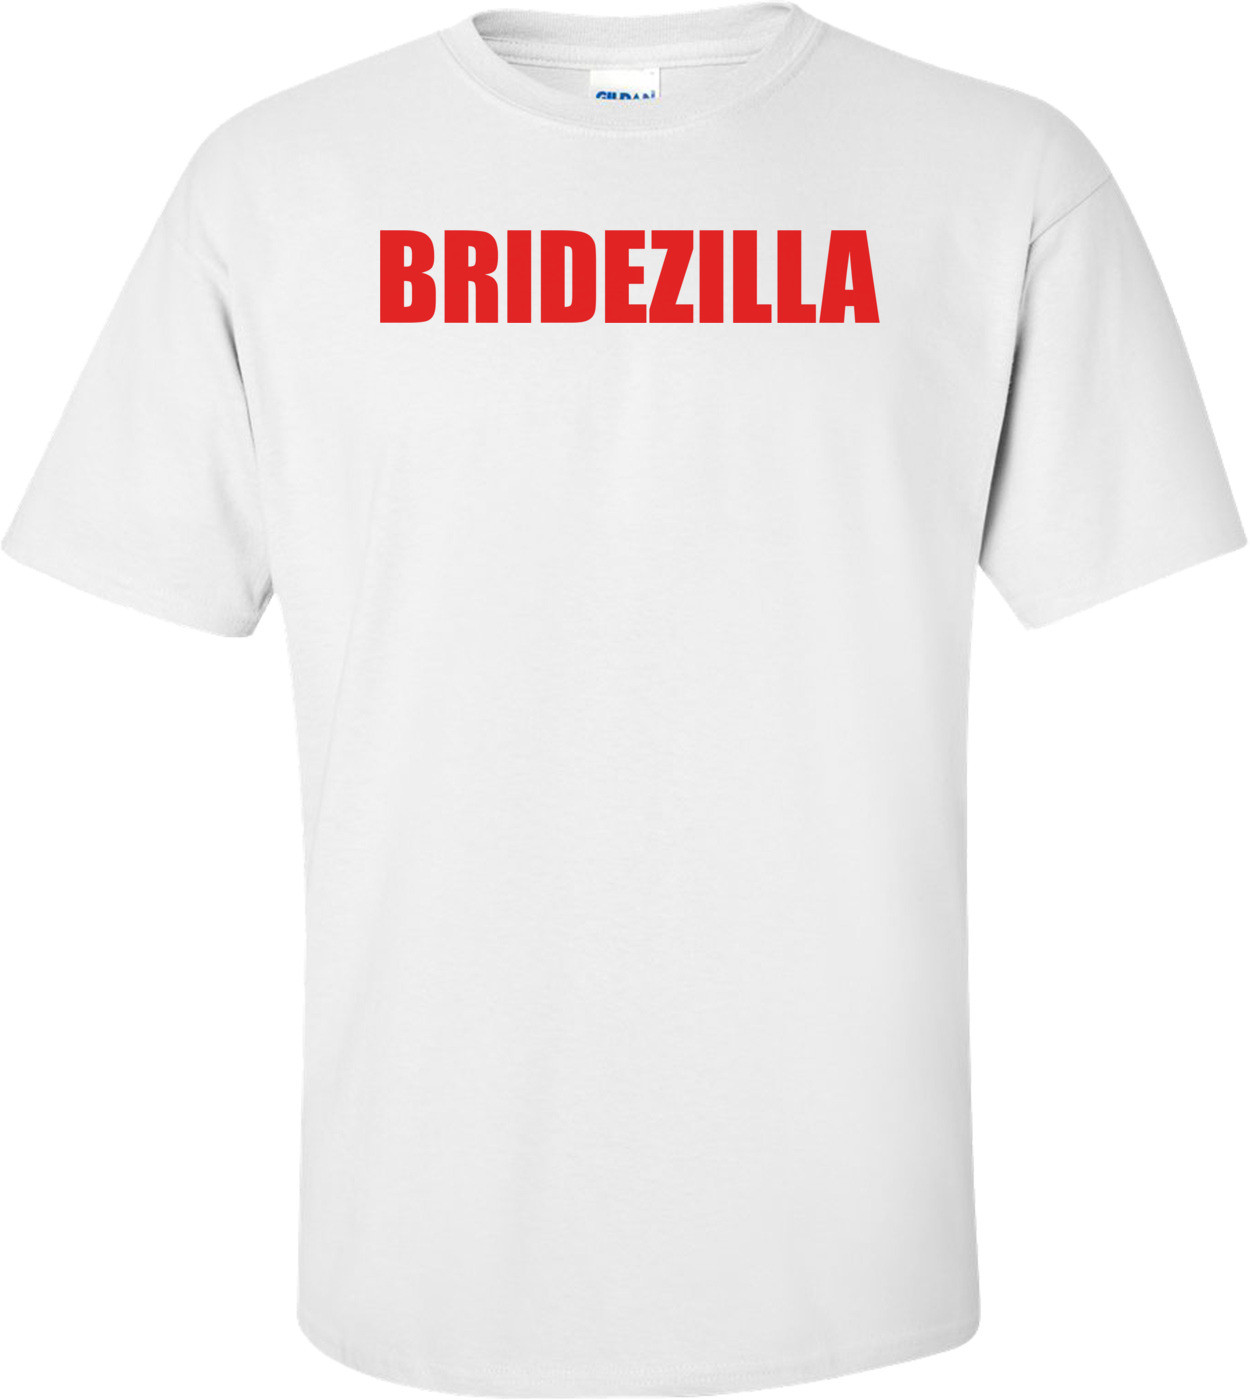 Bridezilla Shirt